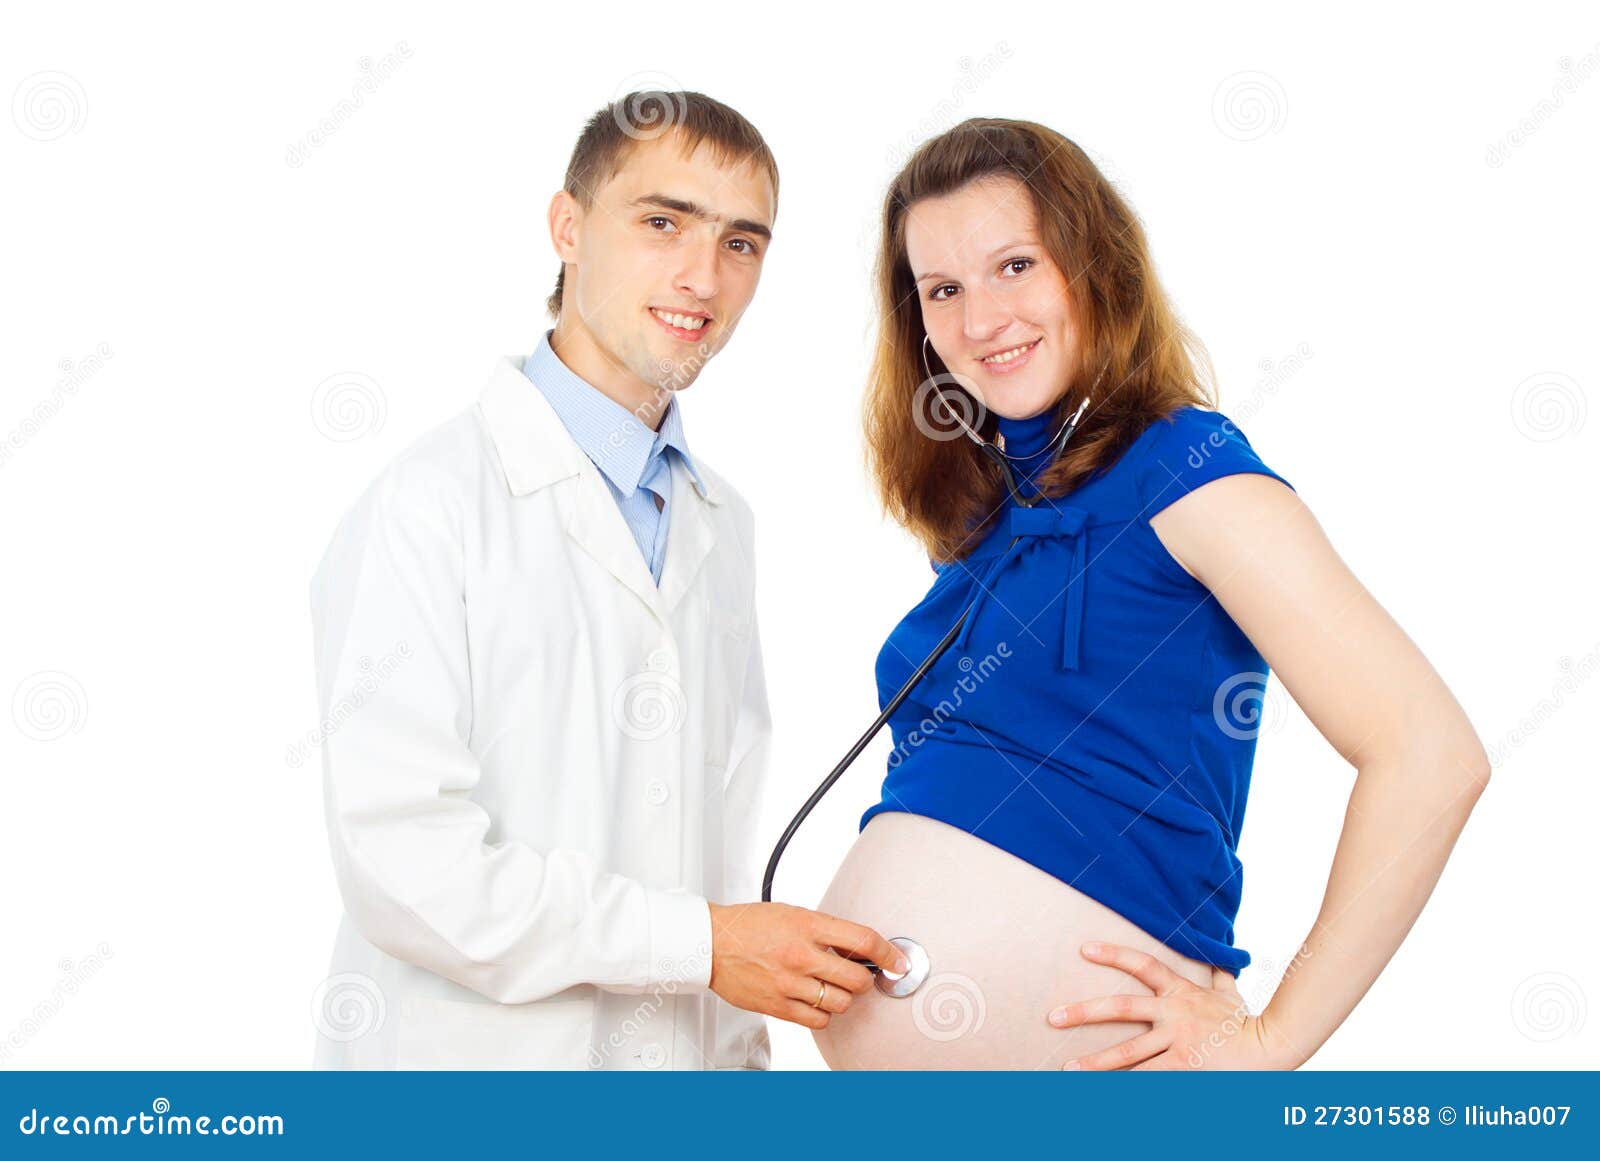 doing a phd while pregnant